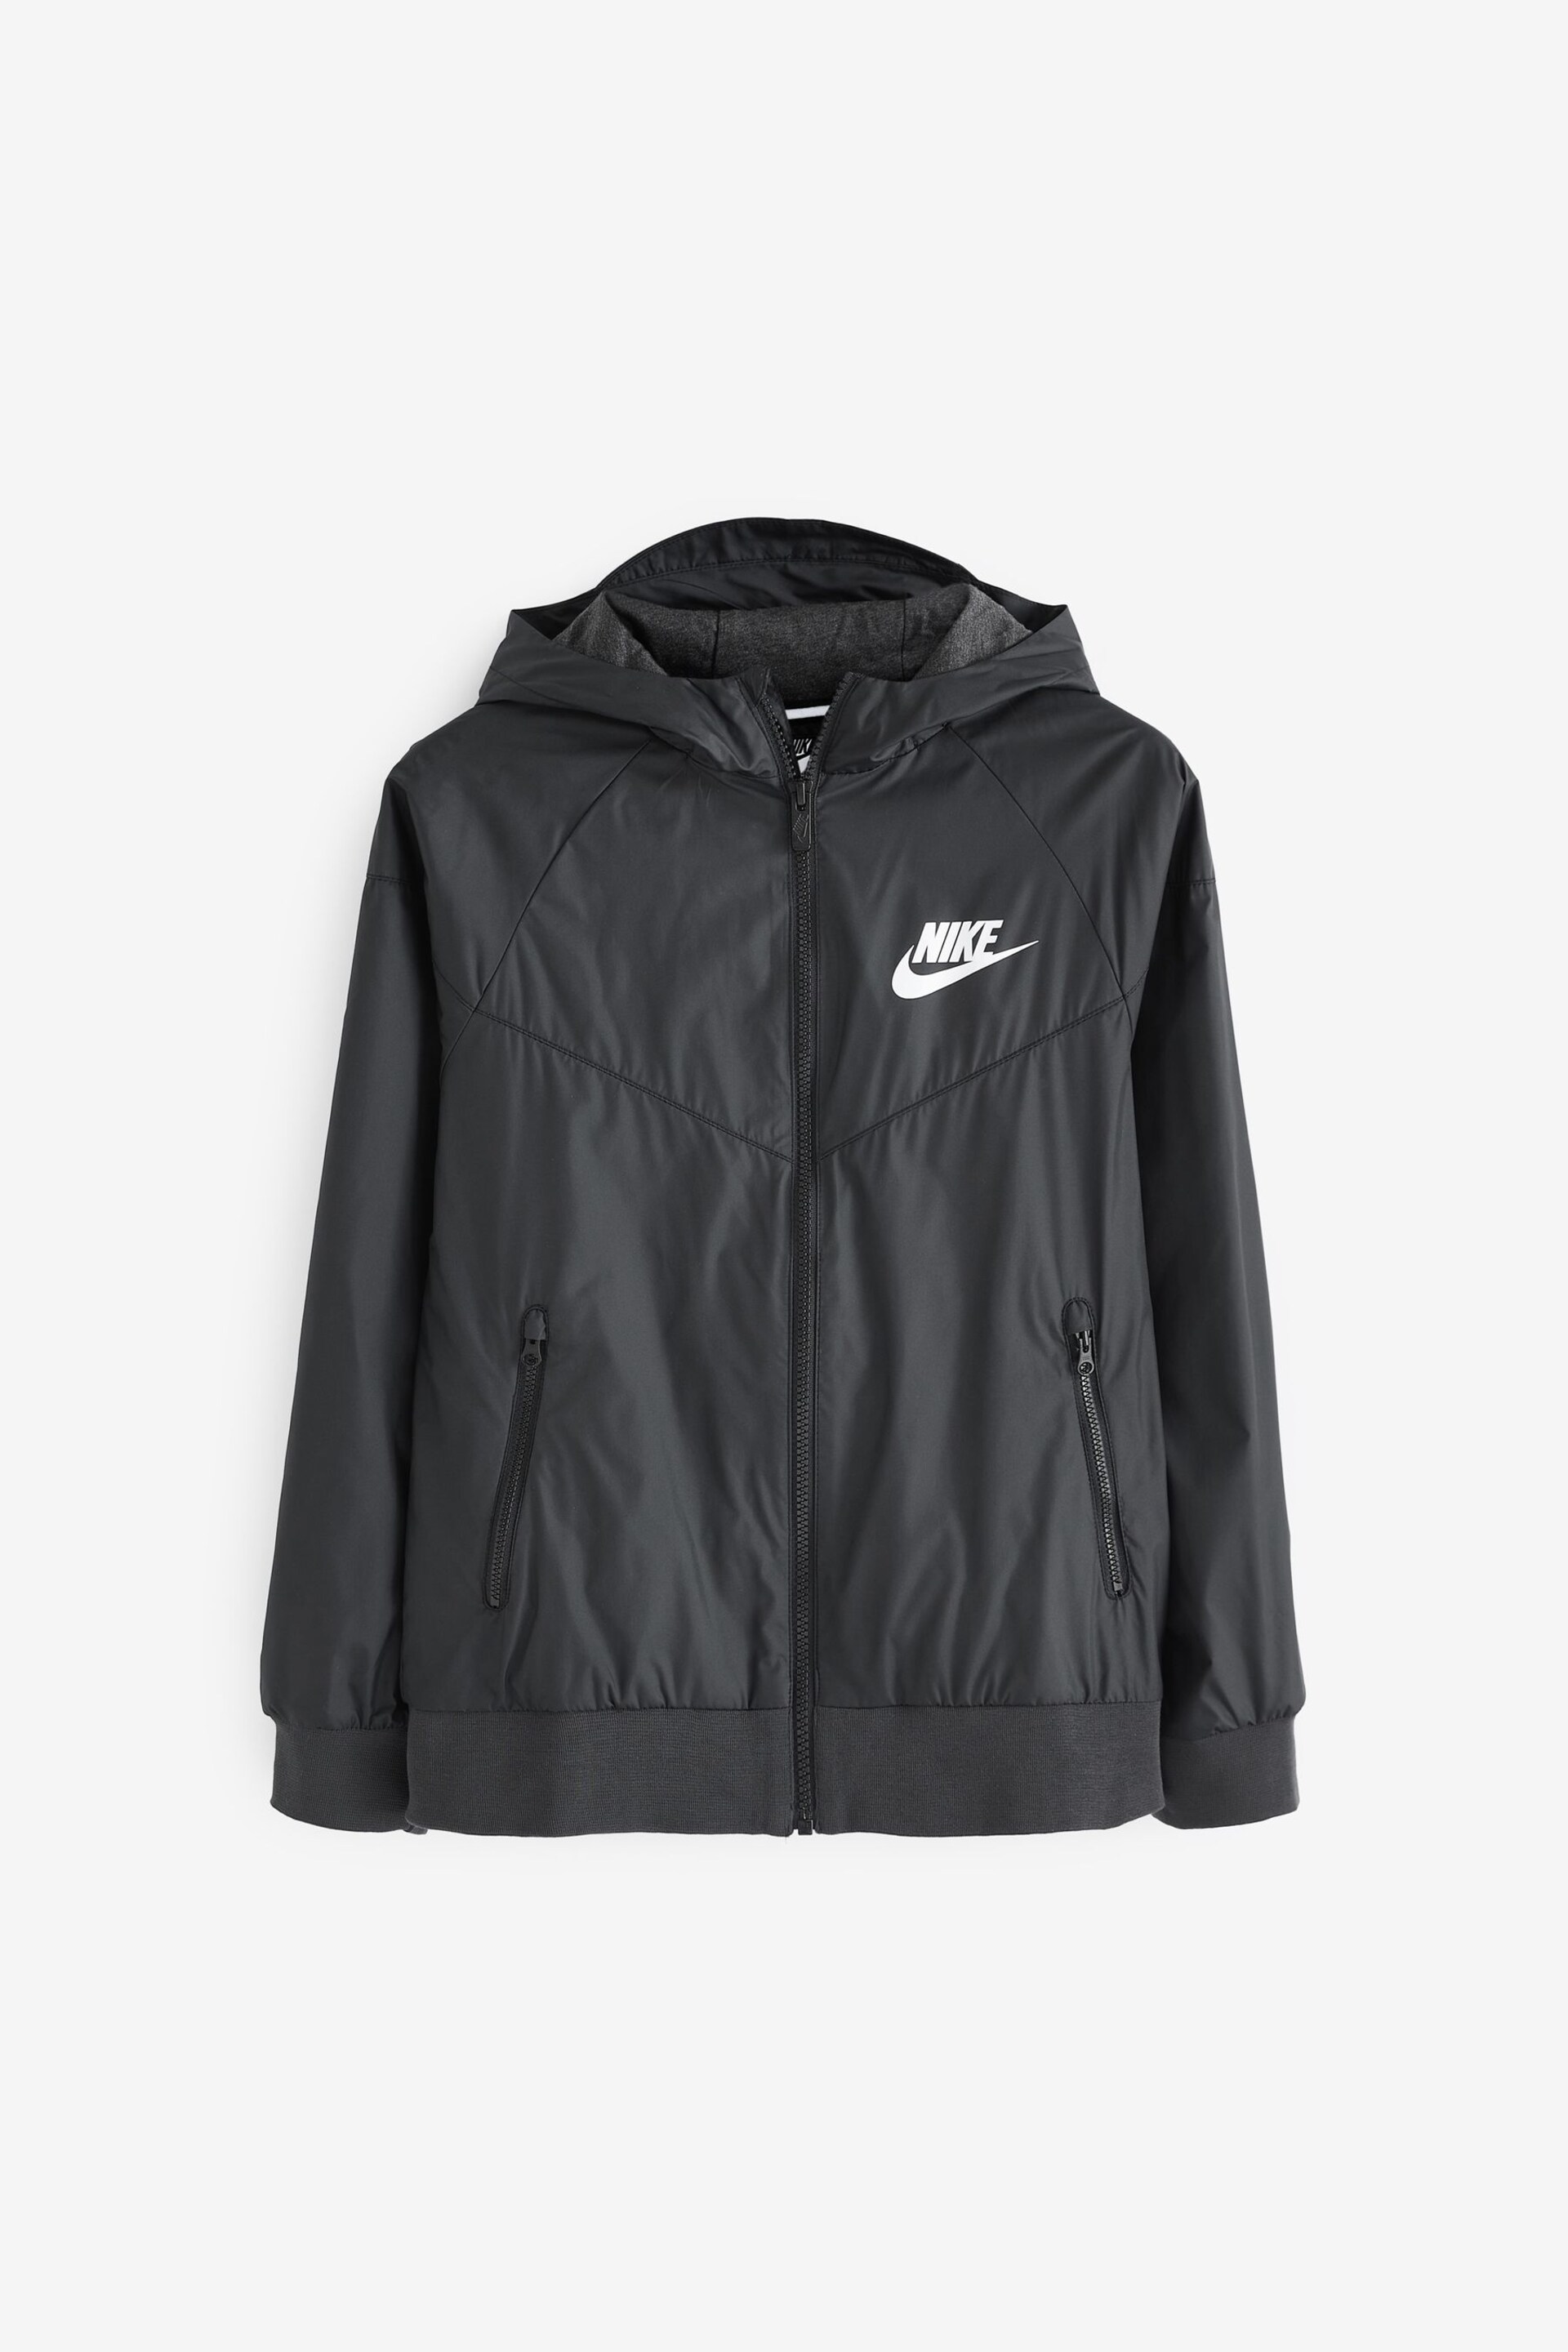 Nike Black Sportswear Windrunner Hooded Jacket - Image 7 of 7